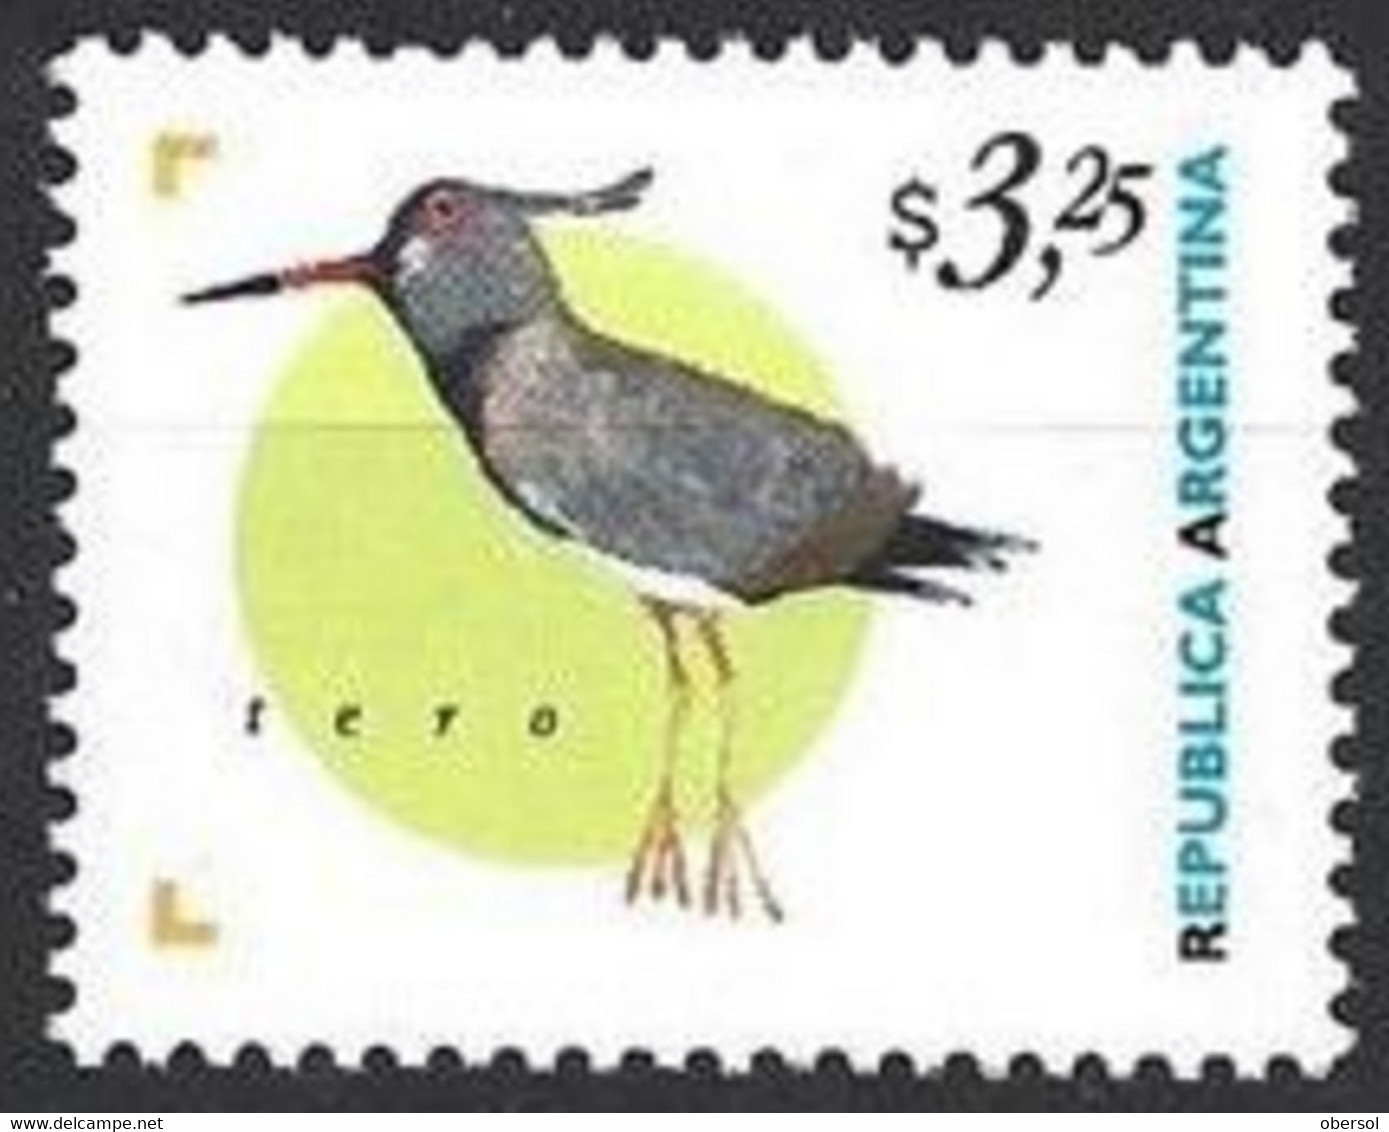 Argentina 1998 Permanent/Definitives Tero Bird Stamp White Gum MNH Stamp - Neufs